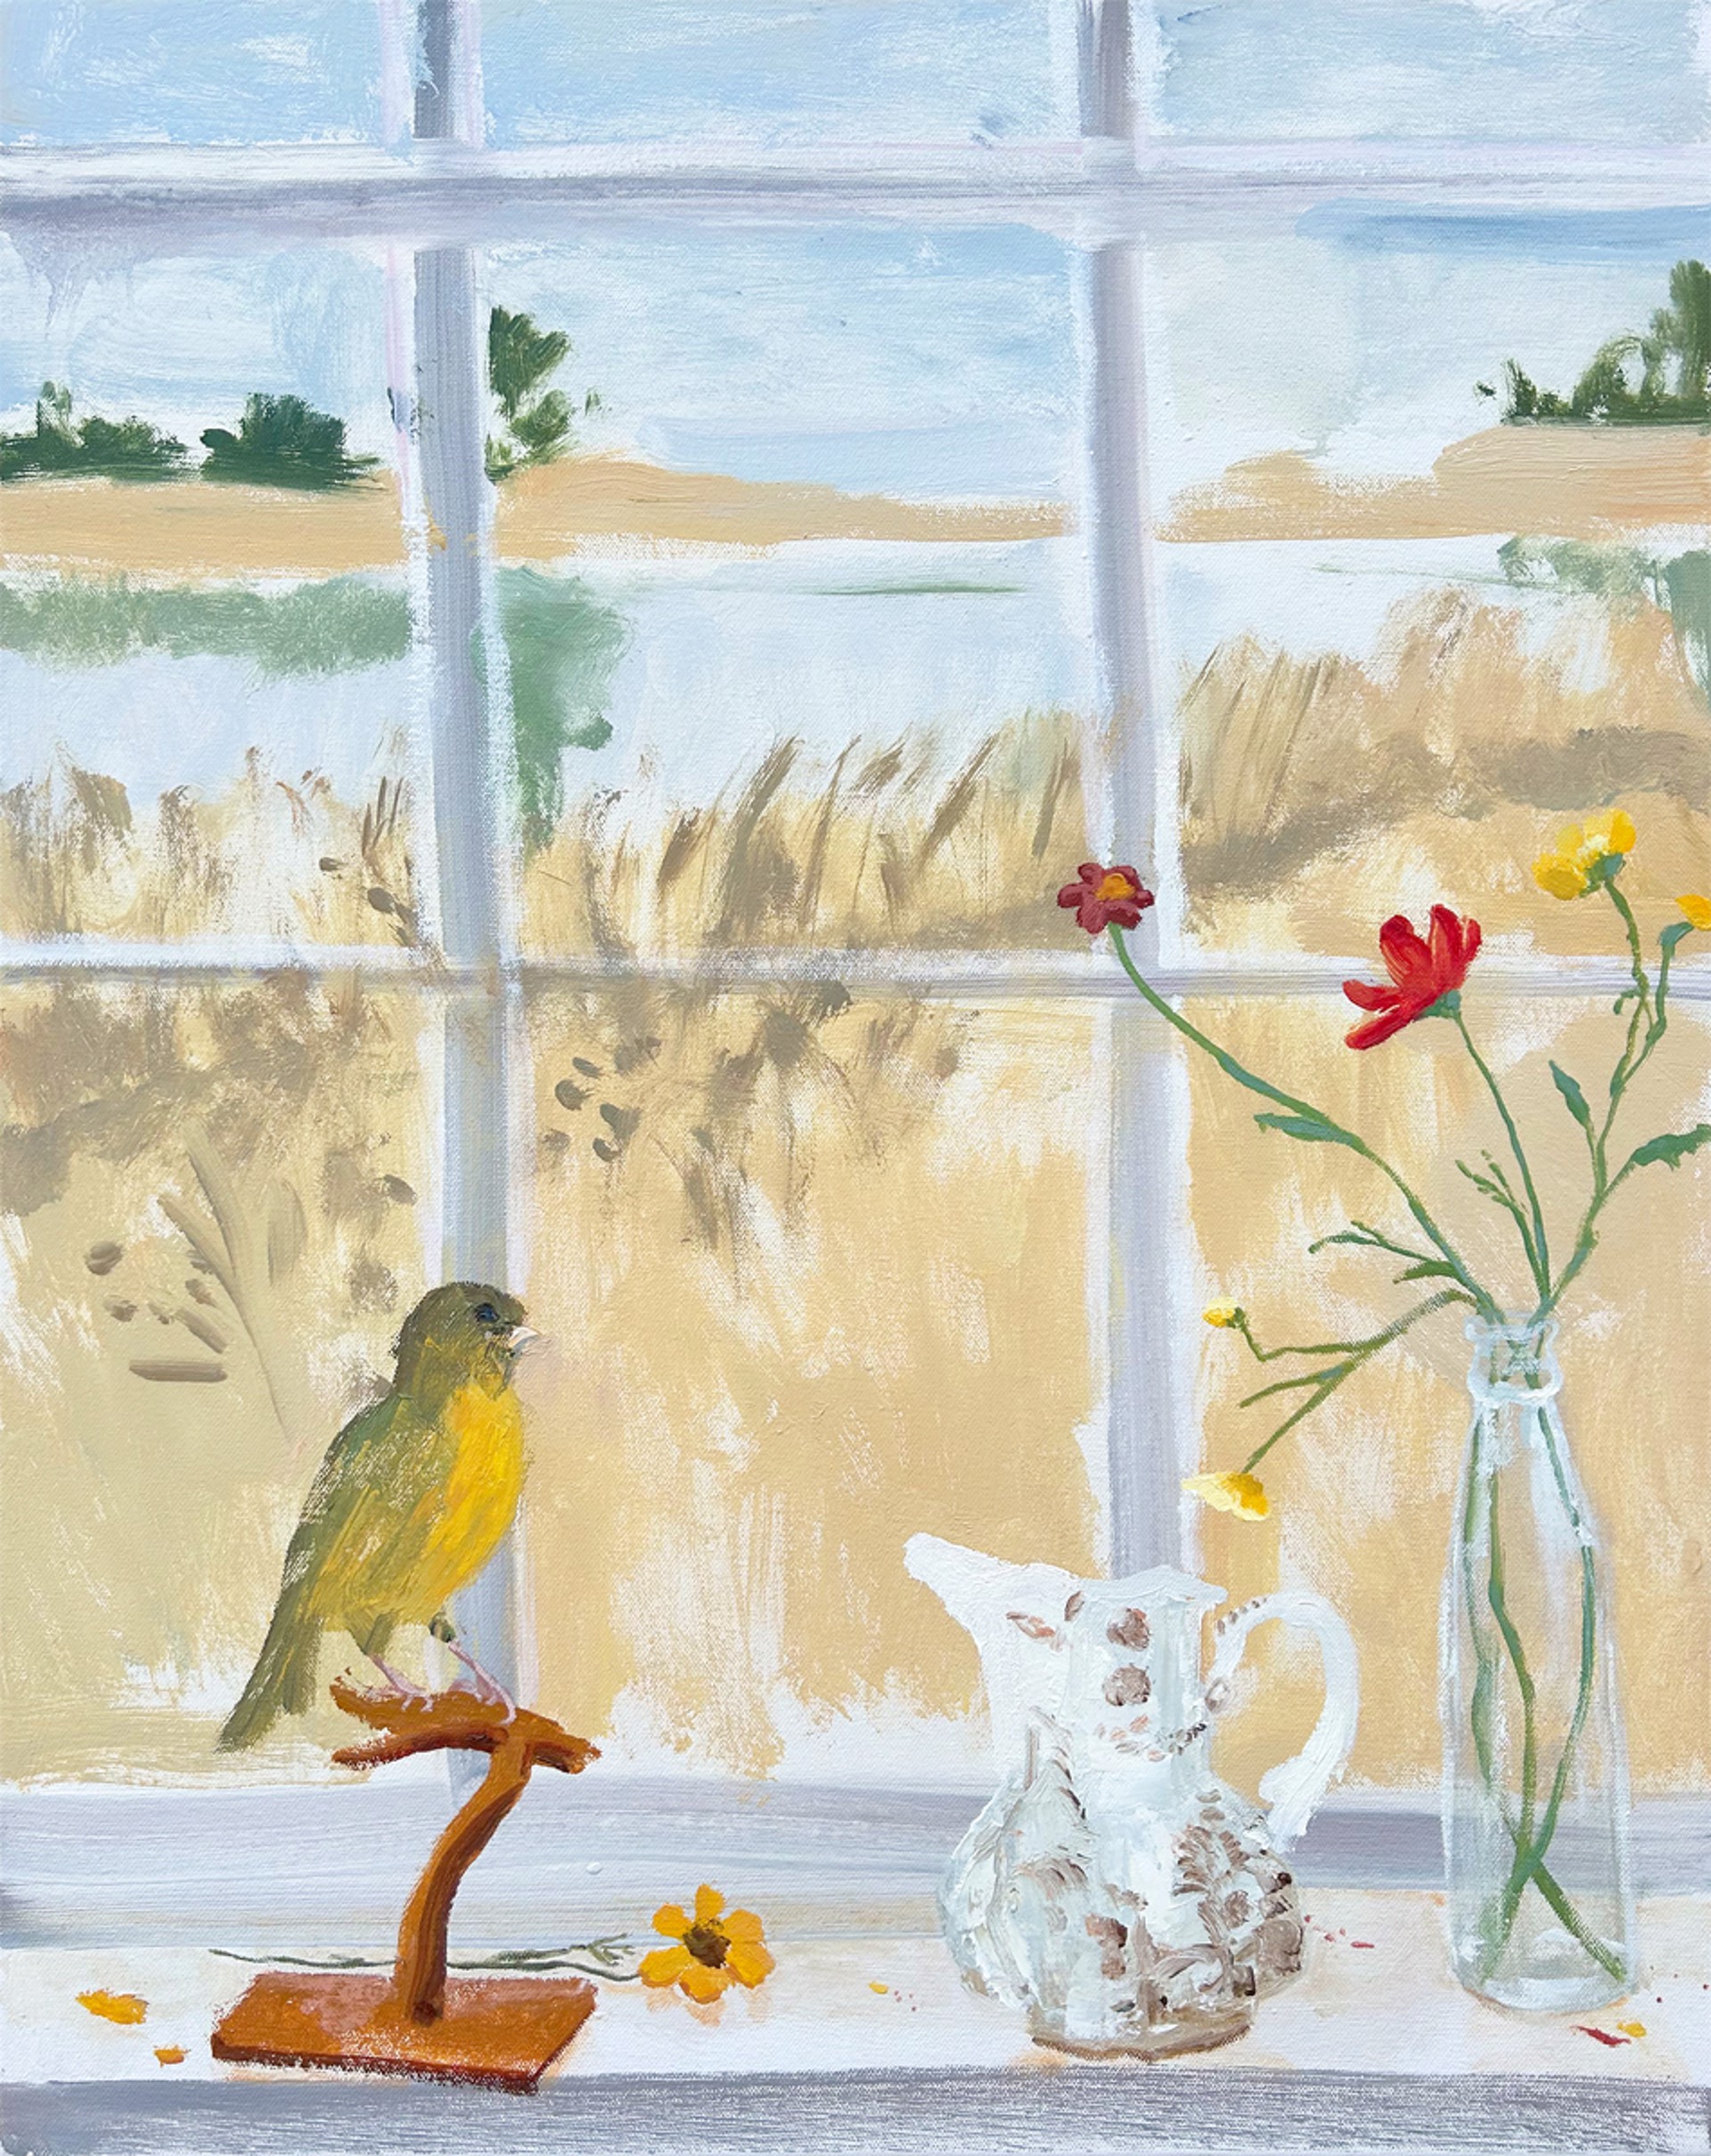 Finch by Melanie Parke